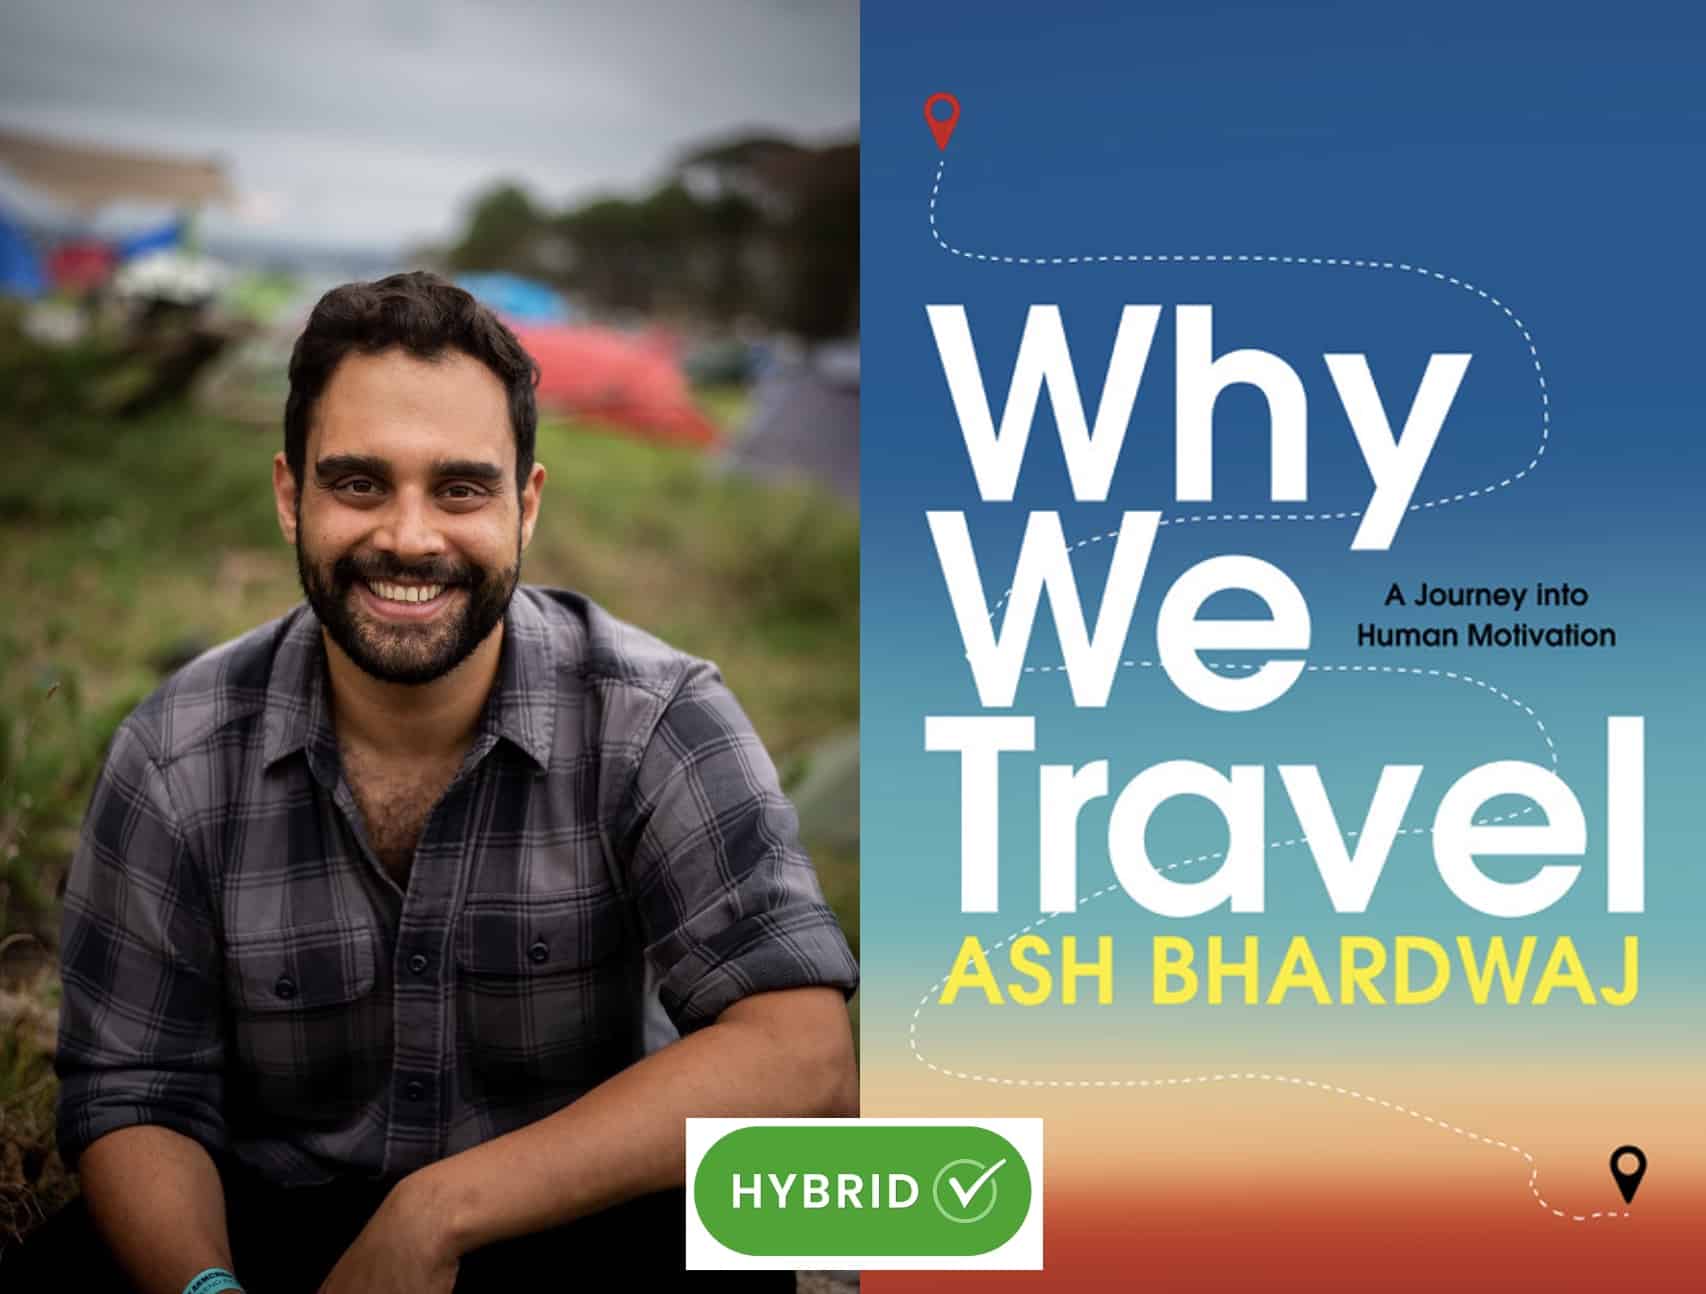 Cream Tea with explorer Ash Bhardwaj – HYBRID EVENT